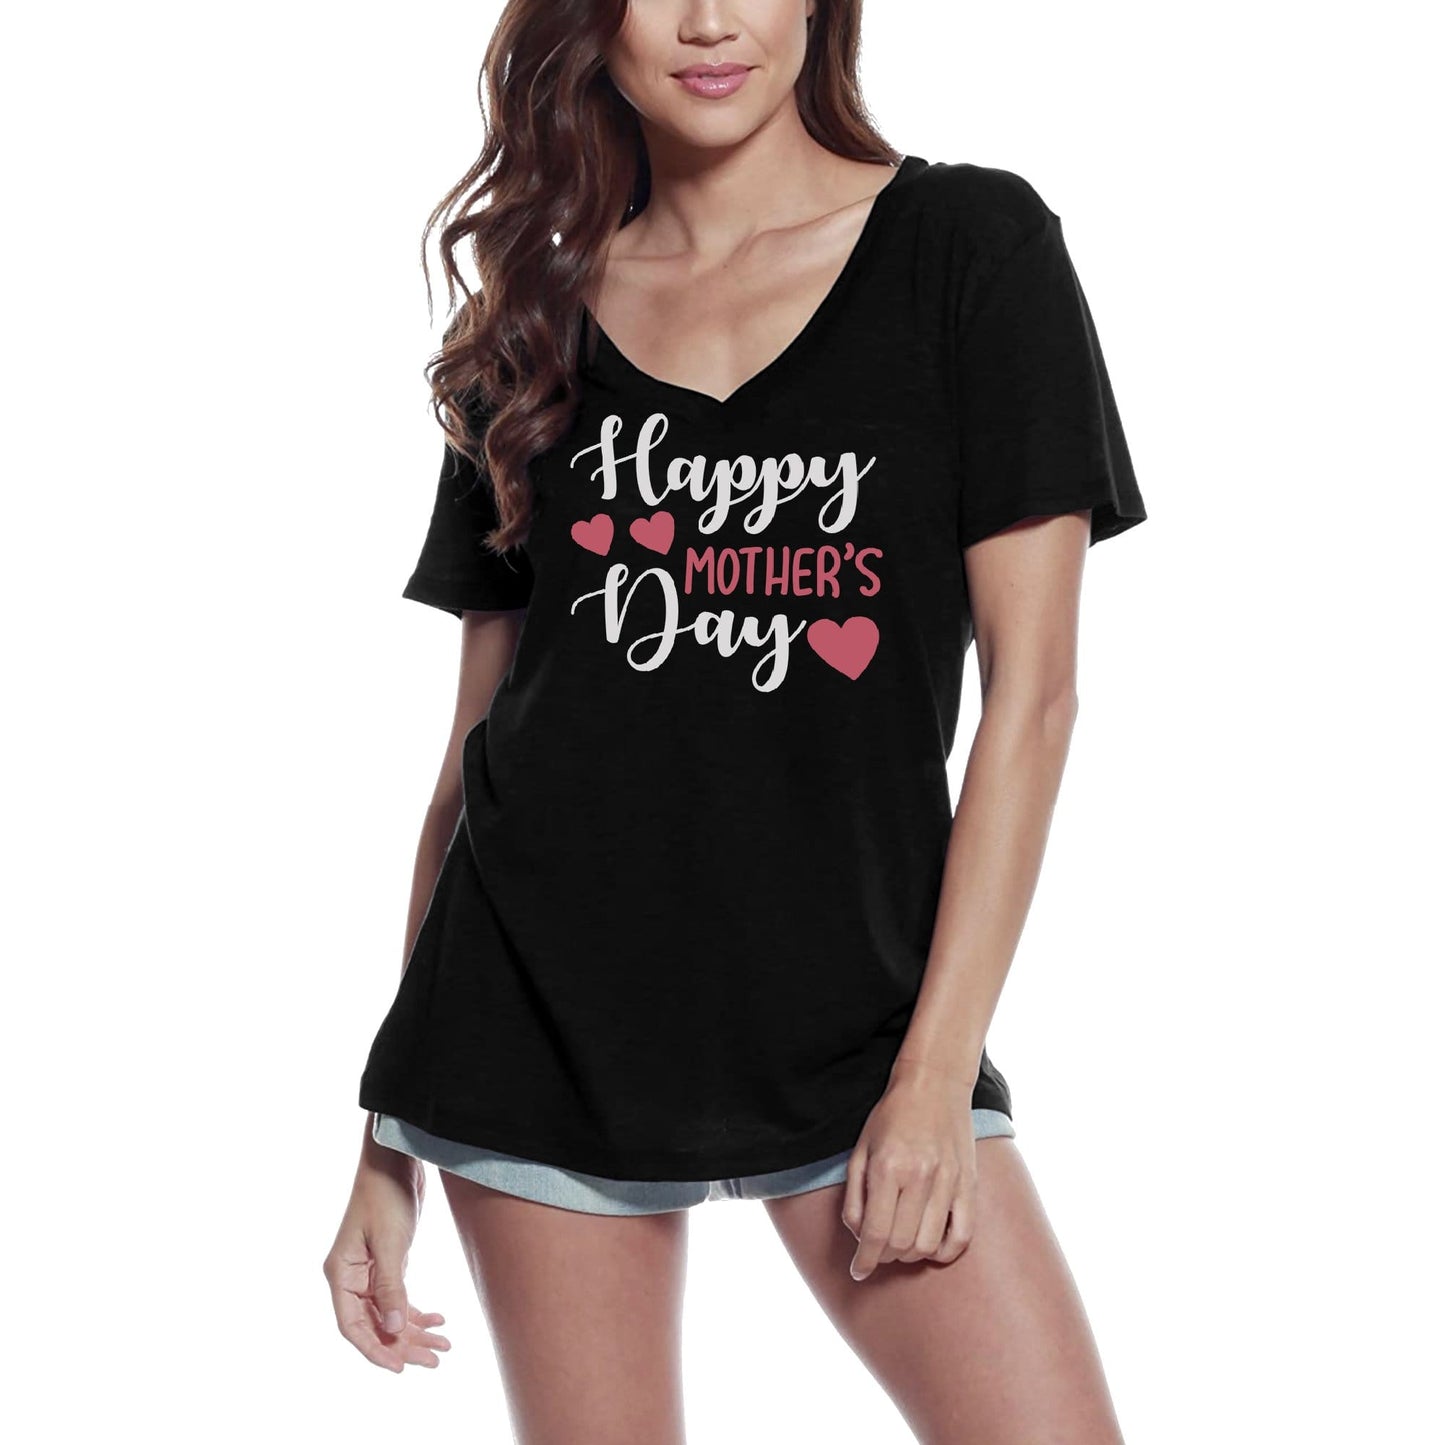 ULTRABASIC Women's T-Shirt Happy Mother's Day - Short Sleeve Tee Shirt Tops